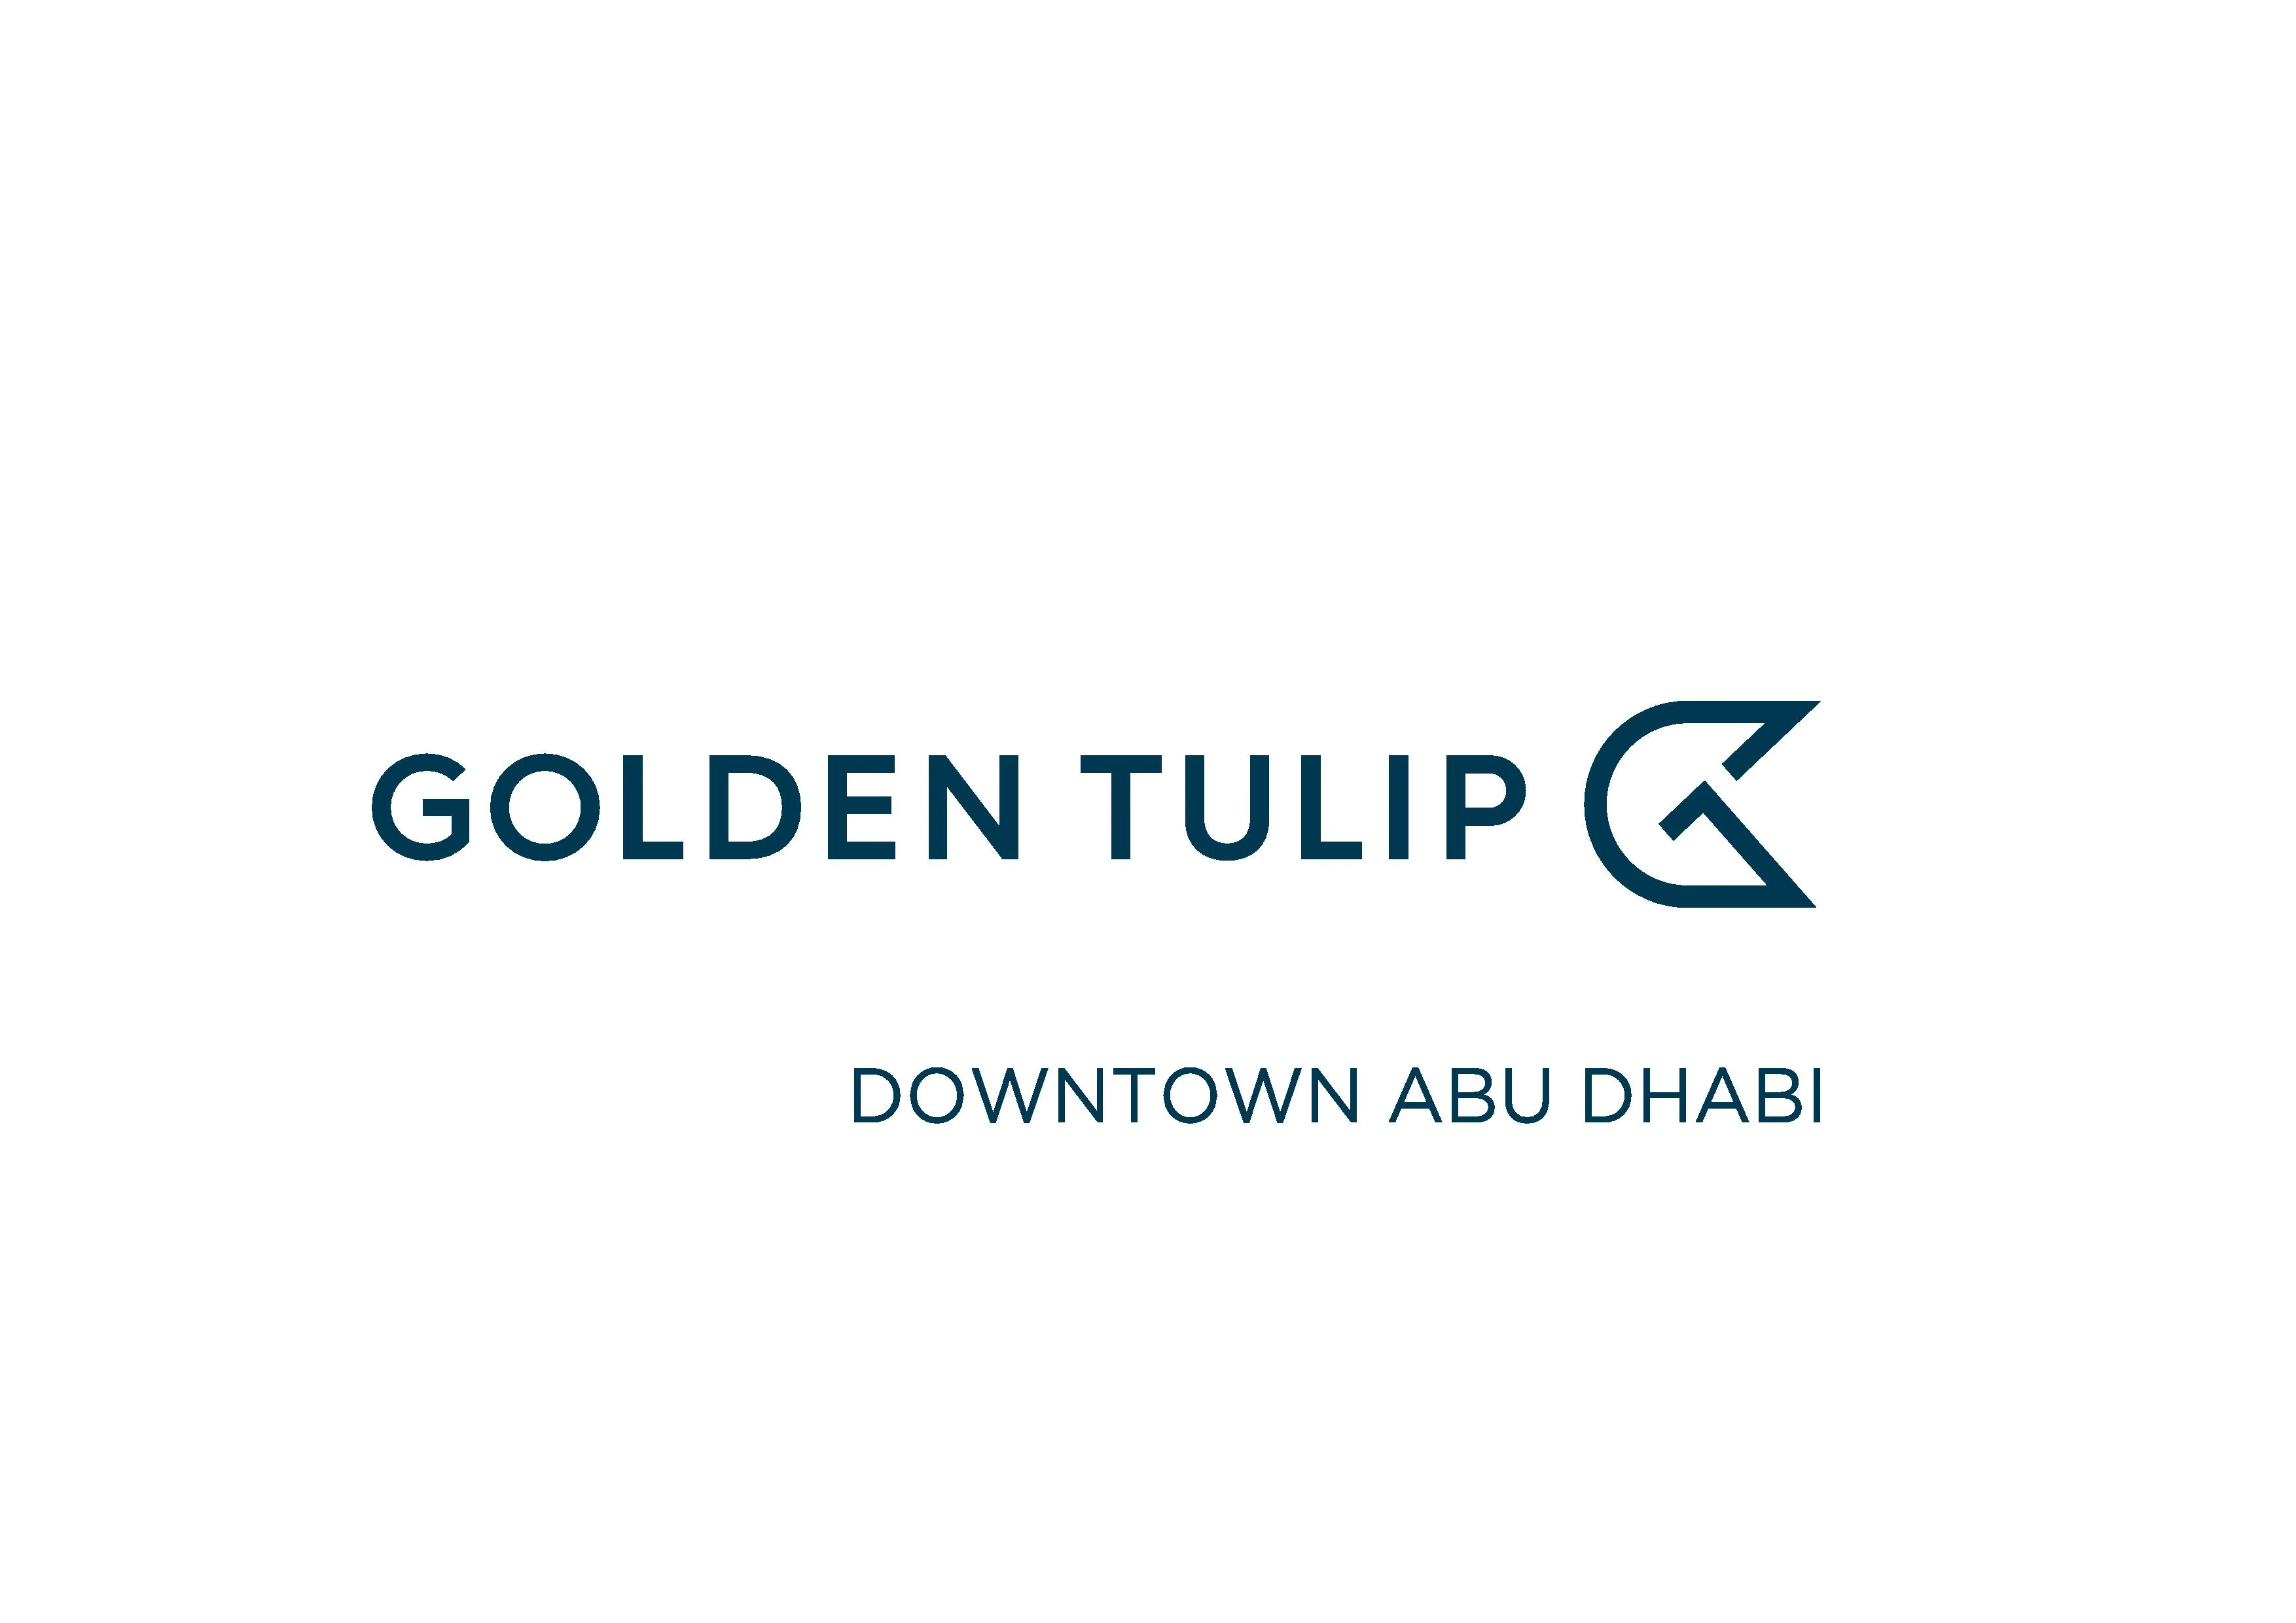 Golden Tulip Downtown Abu Dhabi